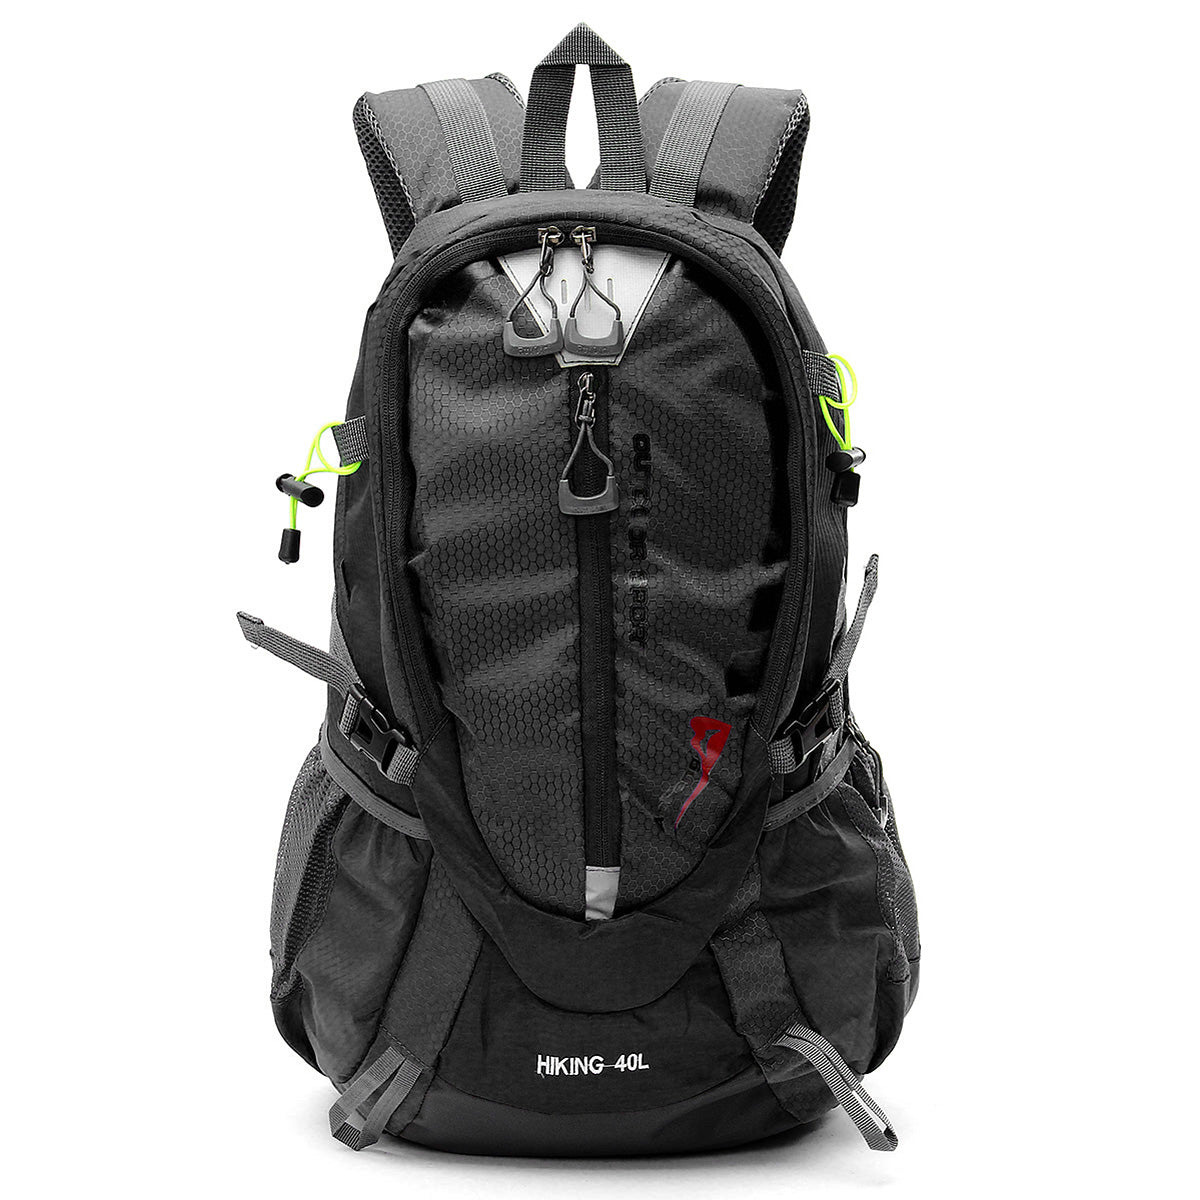 Waterproof Nylon Backpack Sports Travel Hiking